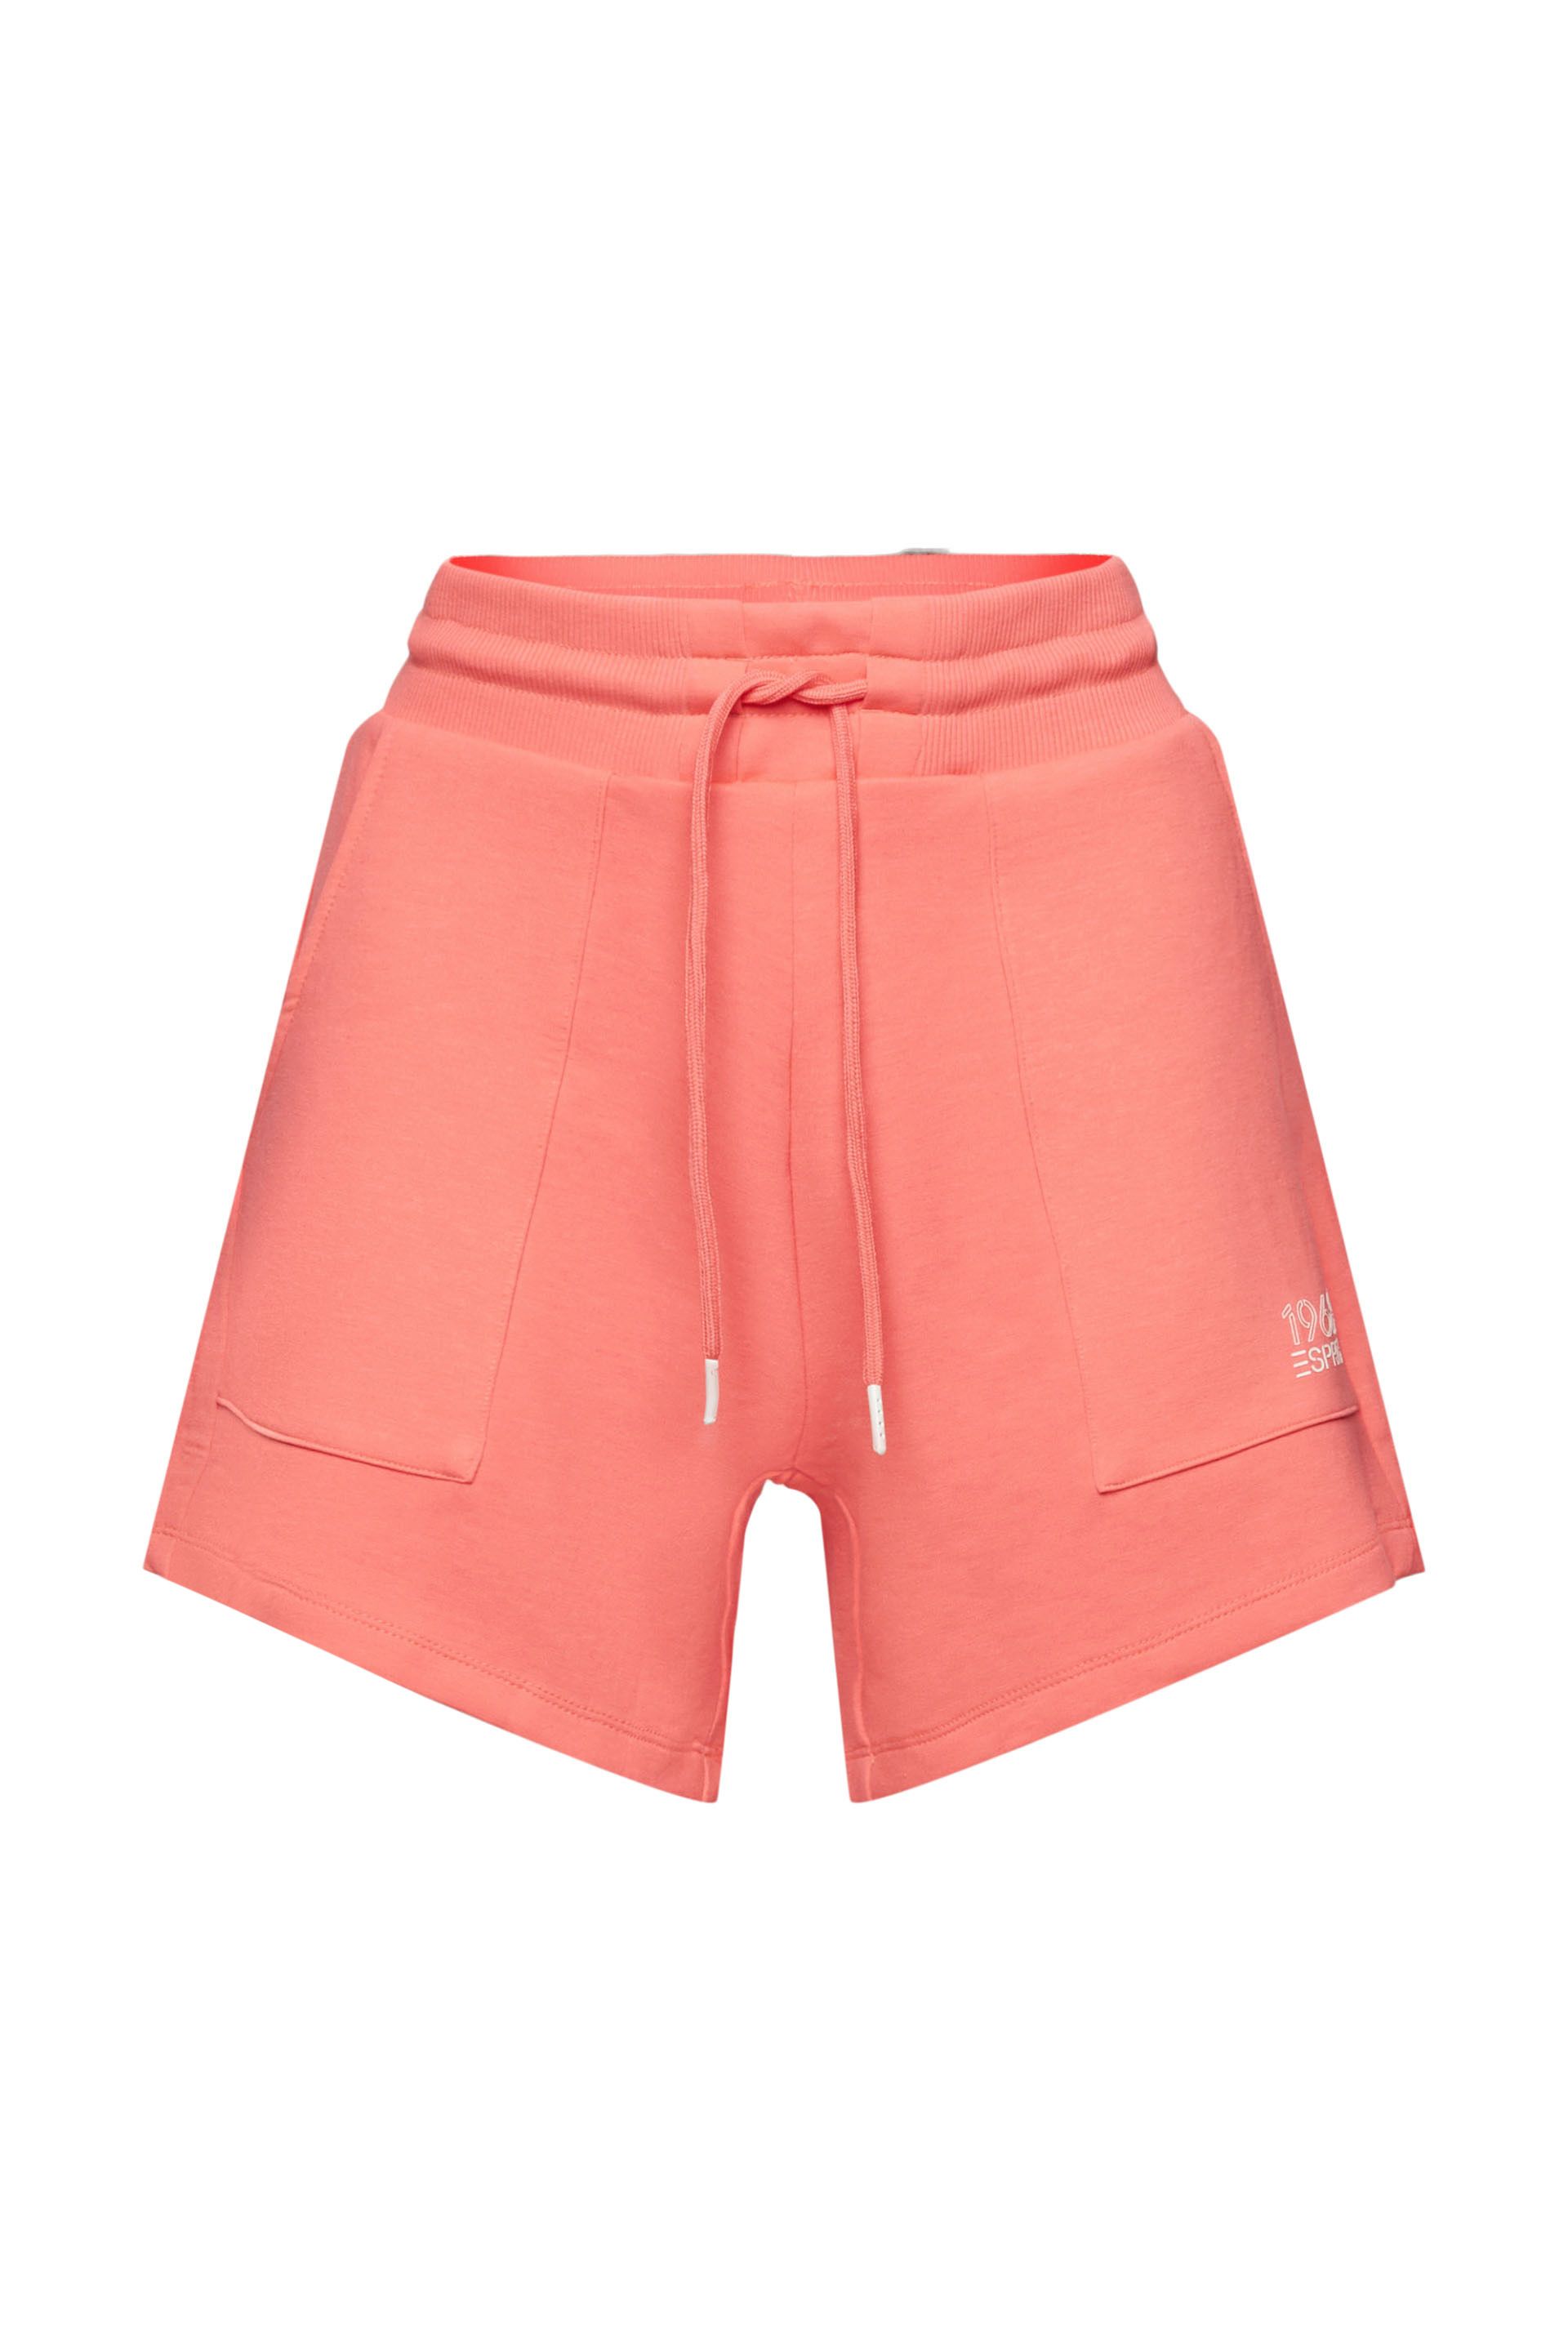 atmungsaktive Jogg-Bermuda-Shorts mit Kordel